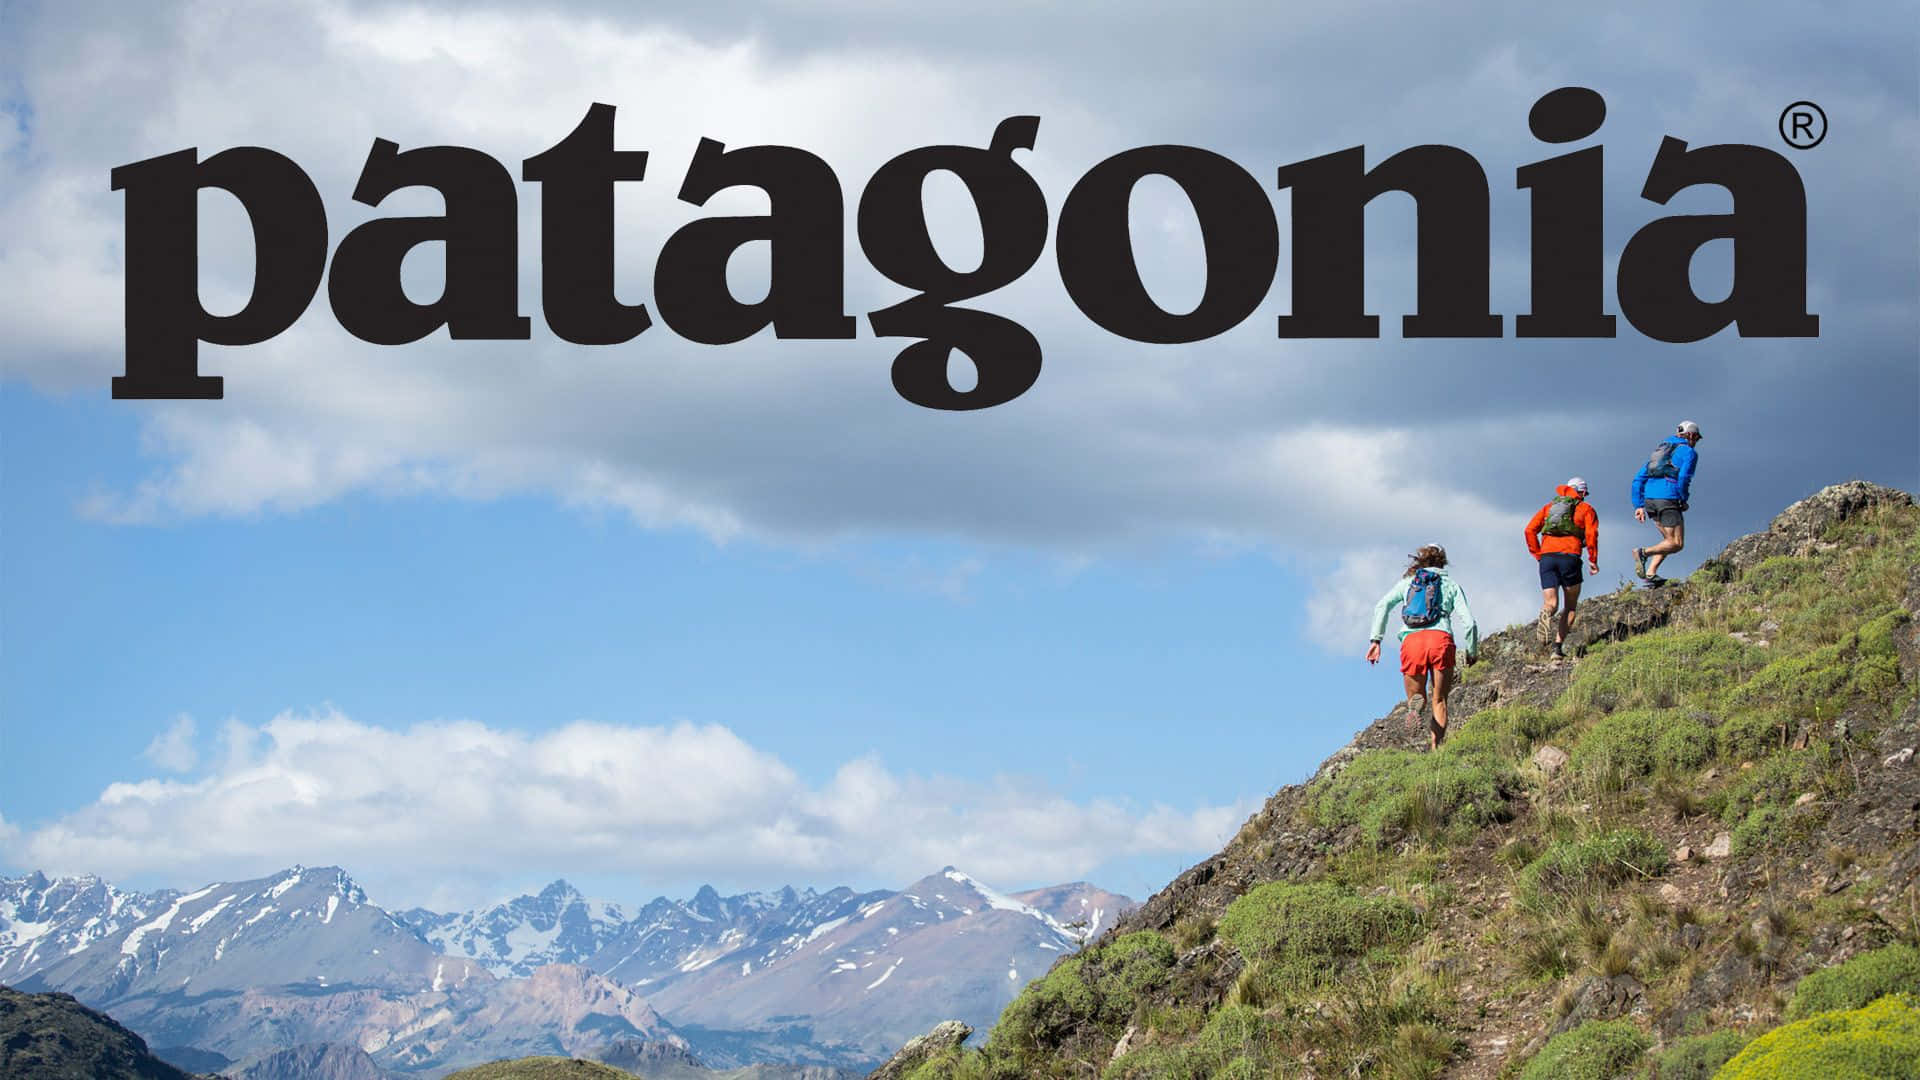 Erlebedie Rustikale Schönheit Patagoniens.